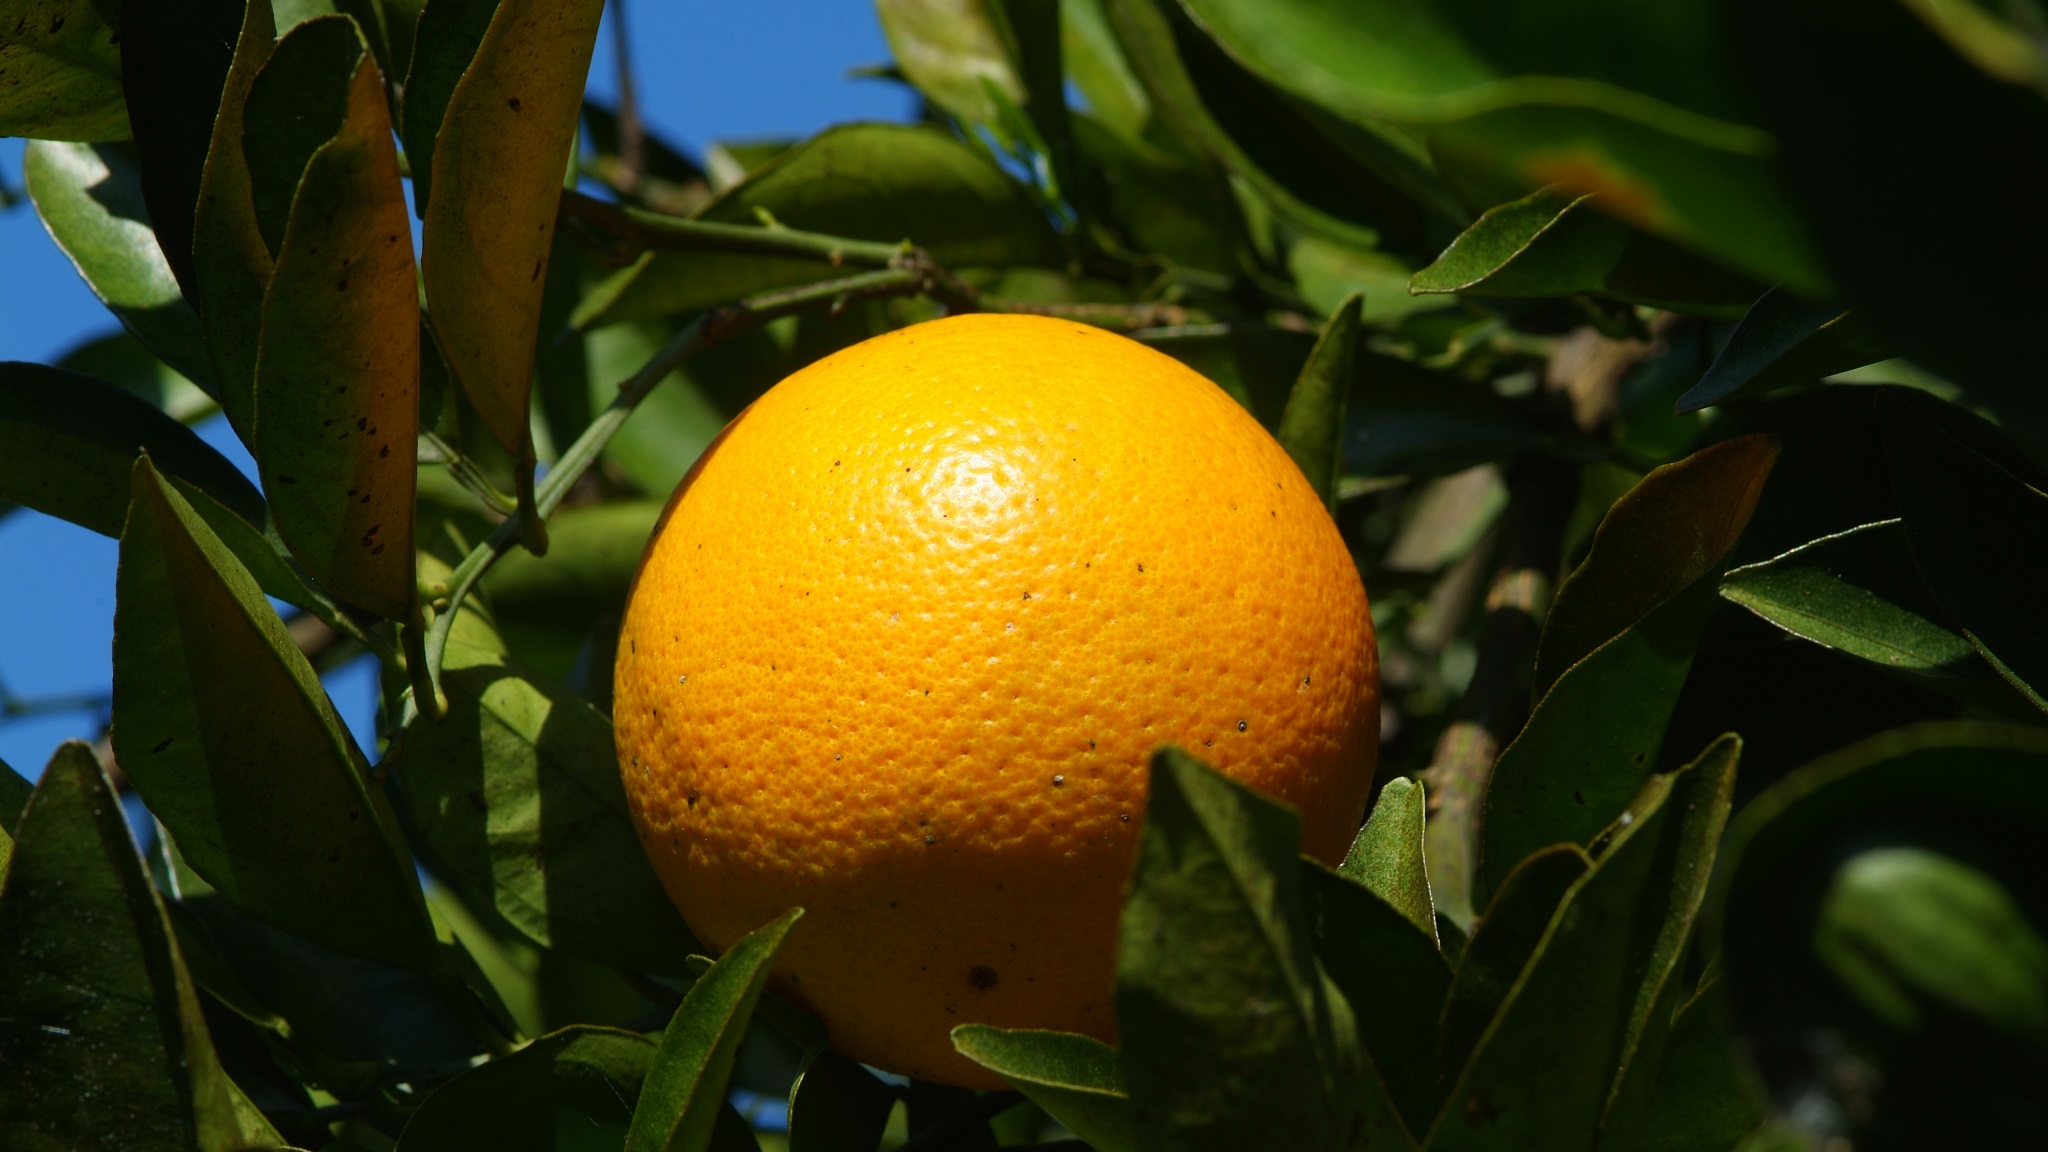 This agronomic image shows an orange.